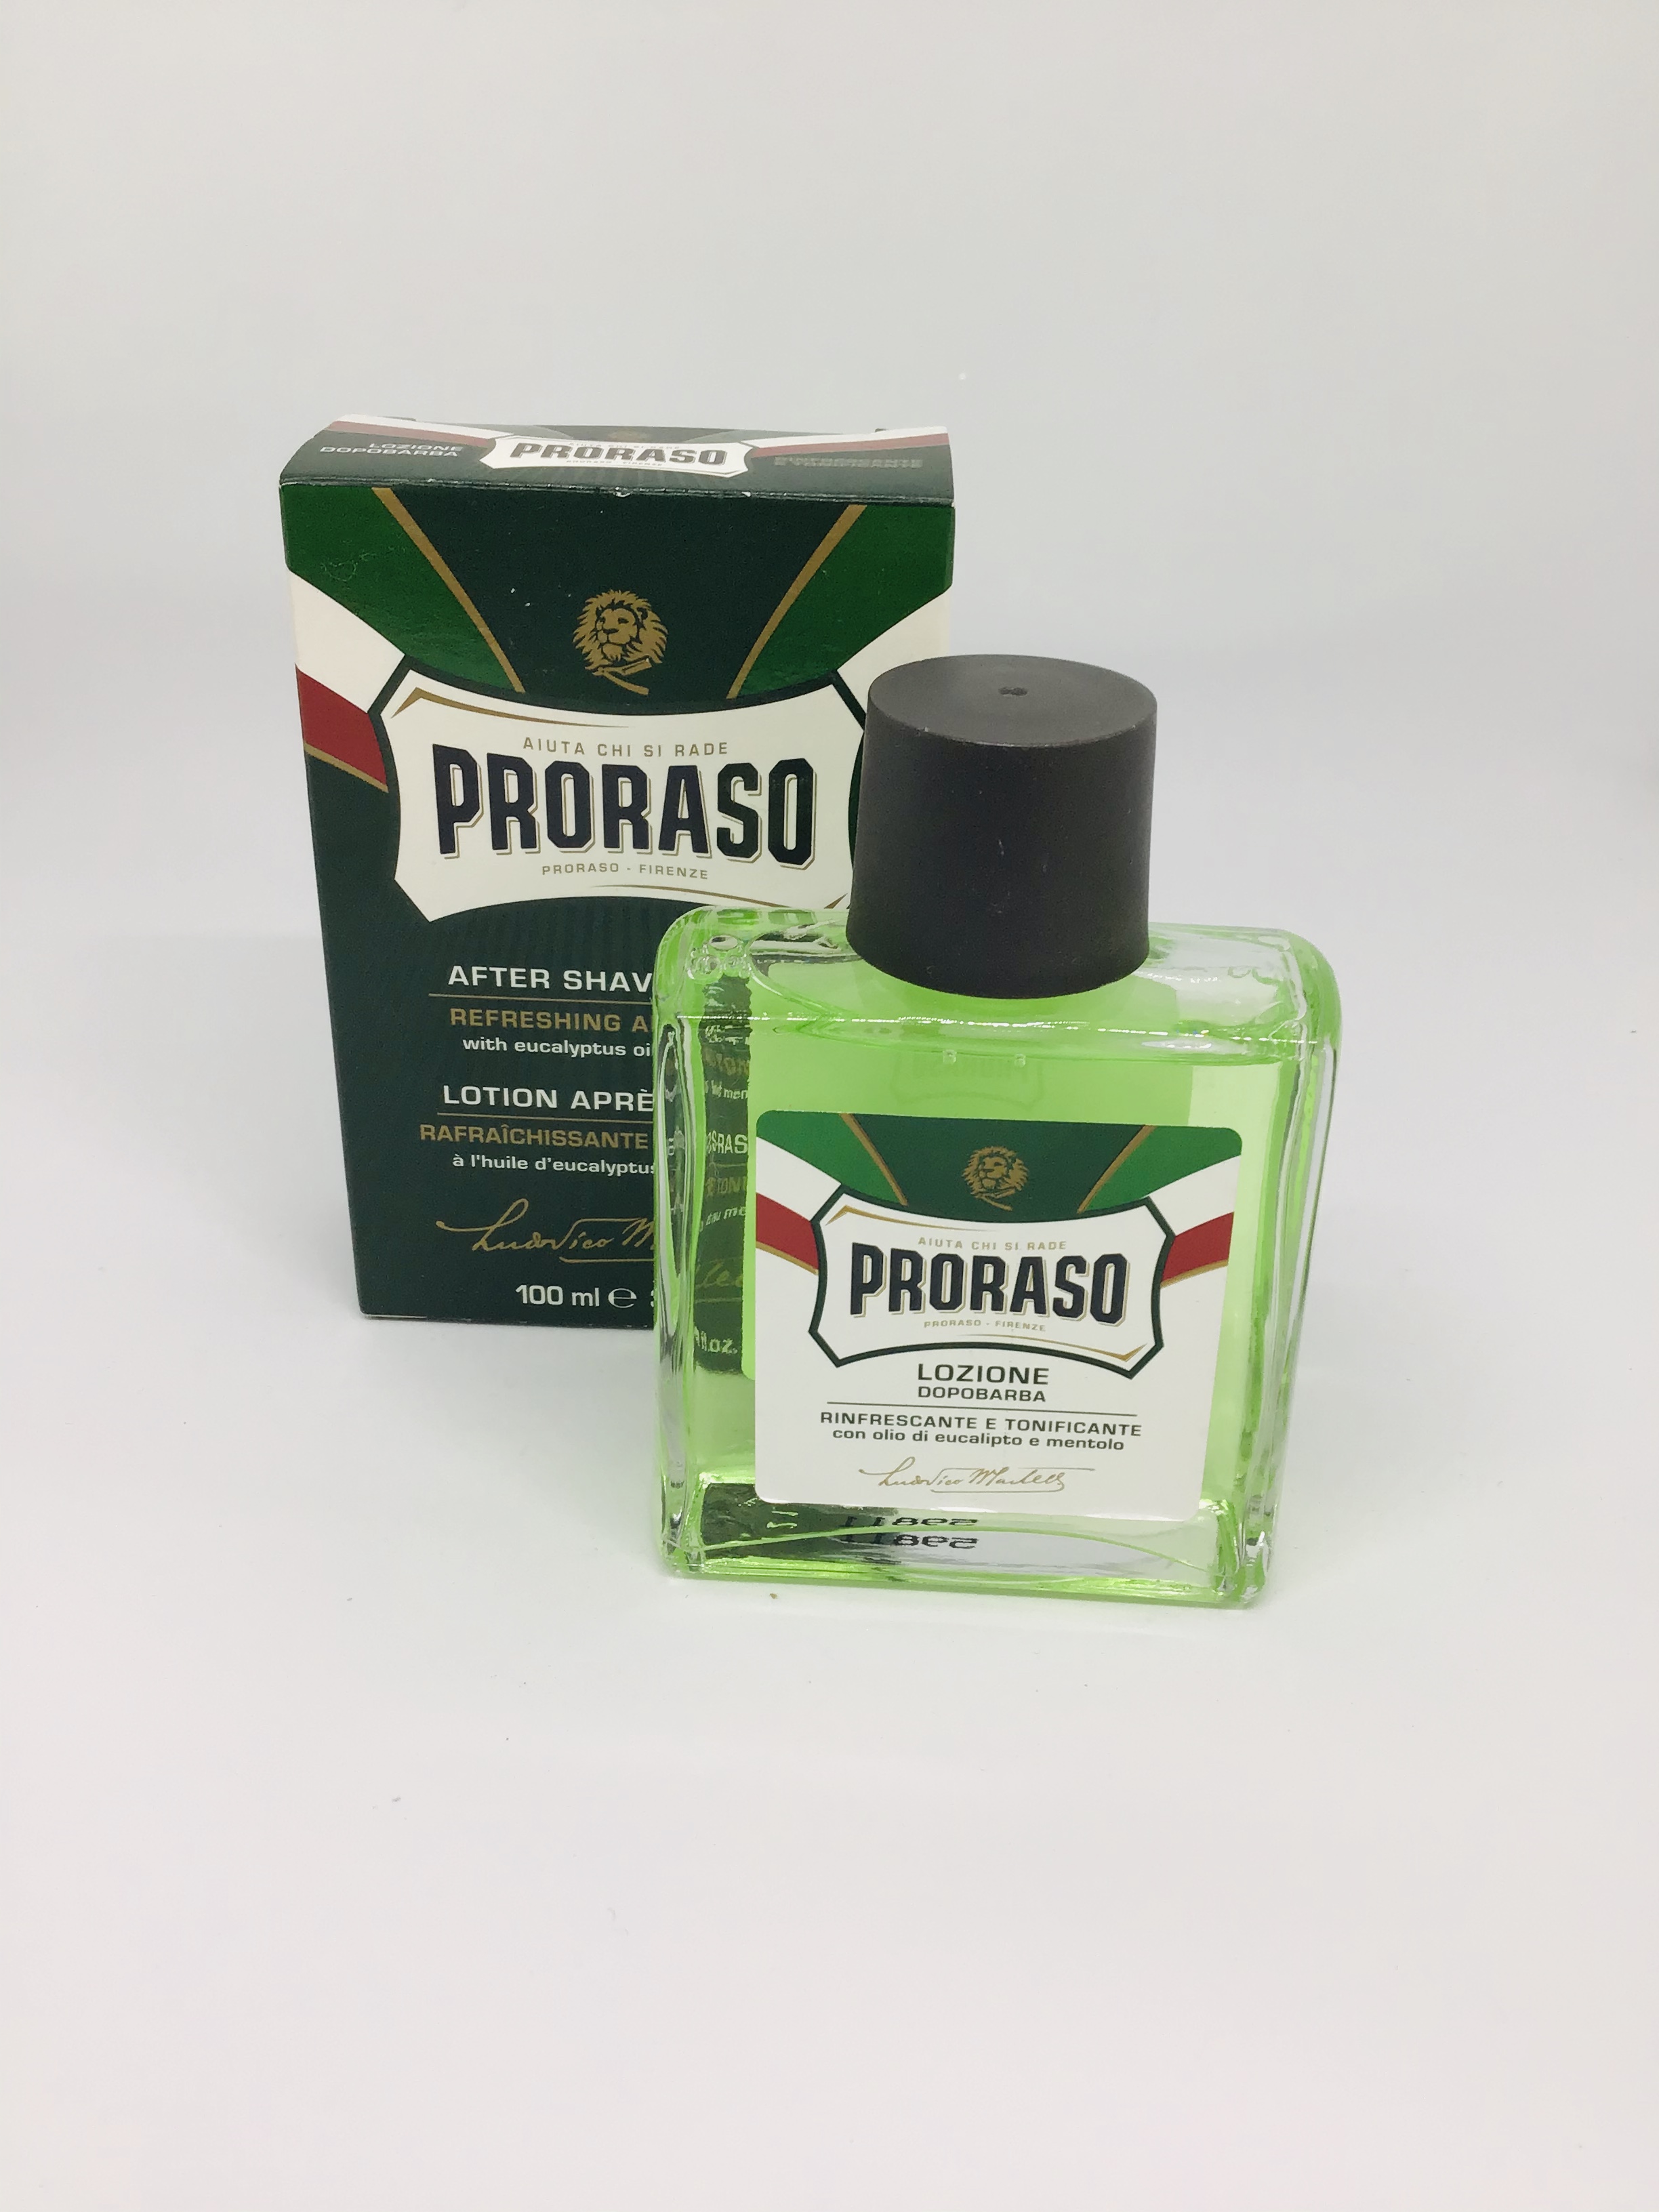 Proraso Aftershave Splash